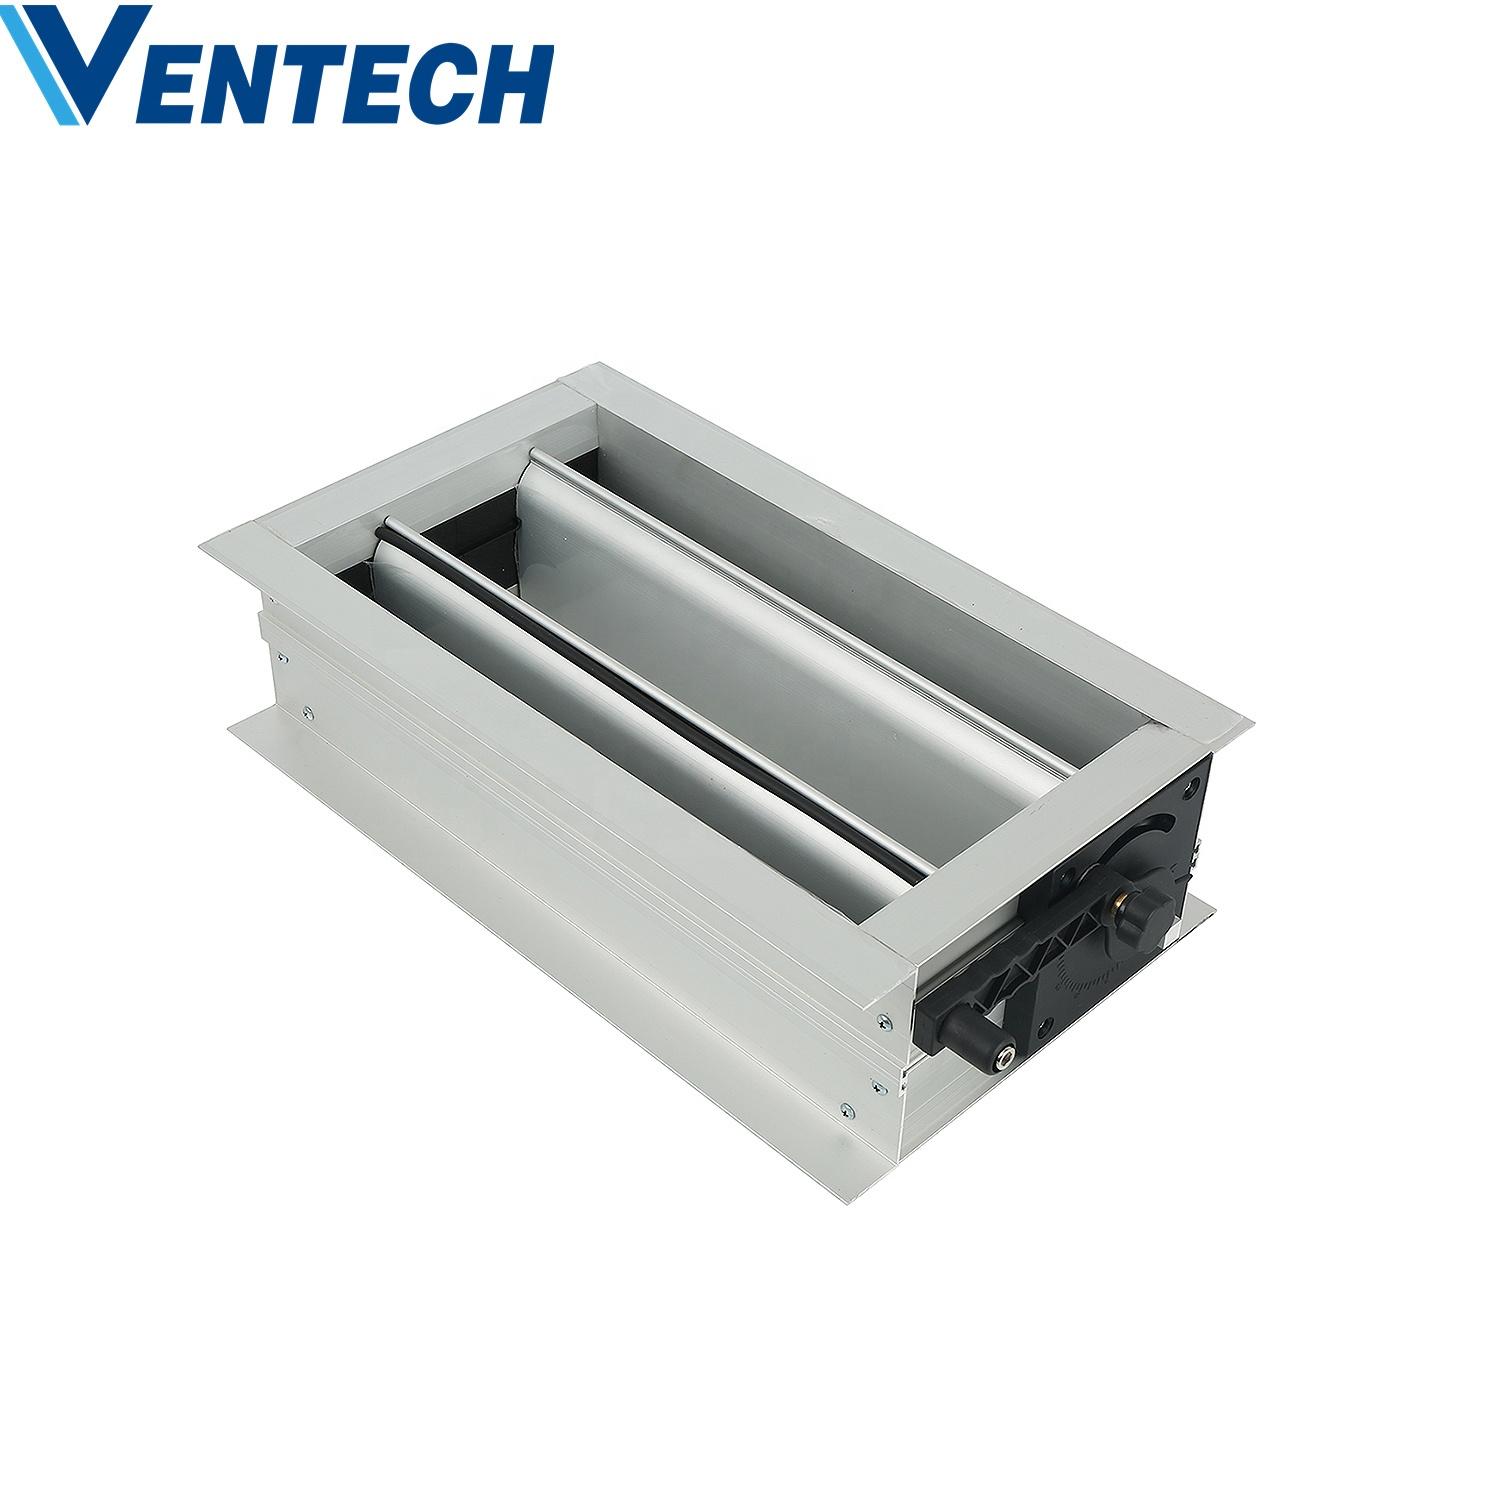 HVAC Air Duct Work Ventilation Aluminium Adjustable Oppsed Blades Gear Air Volume Control Damper